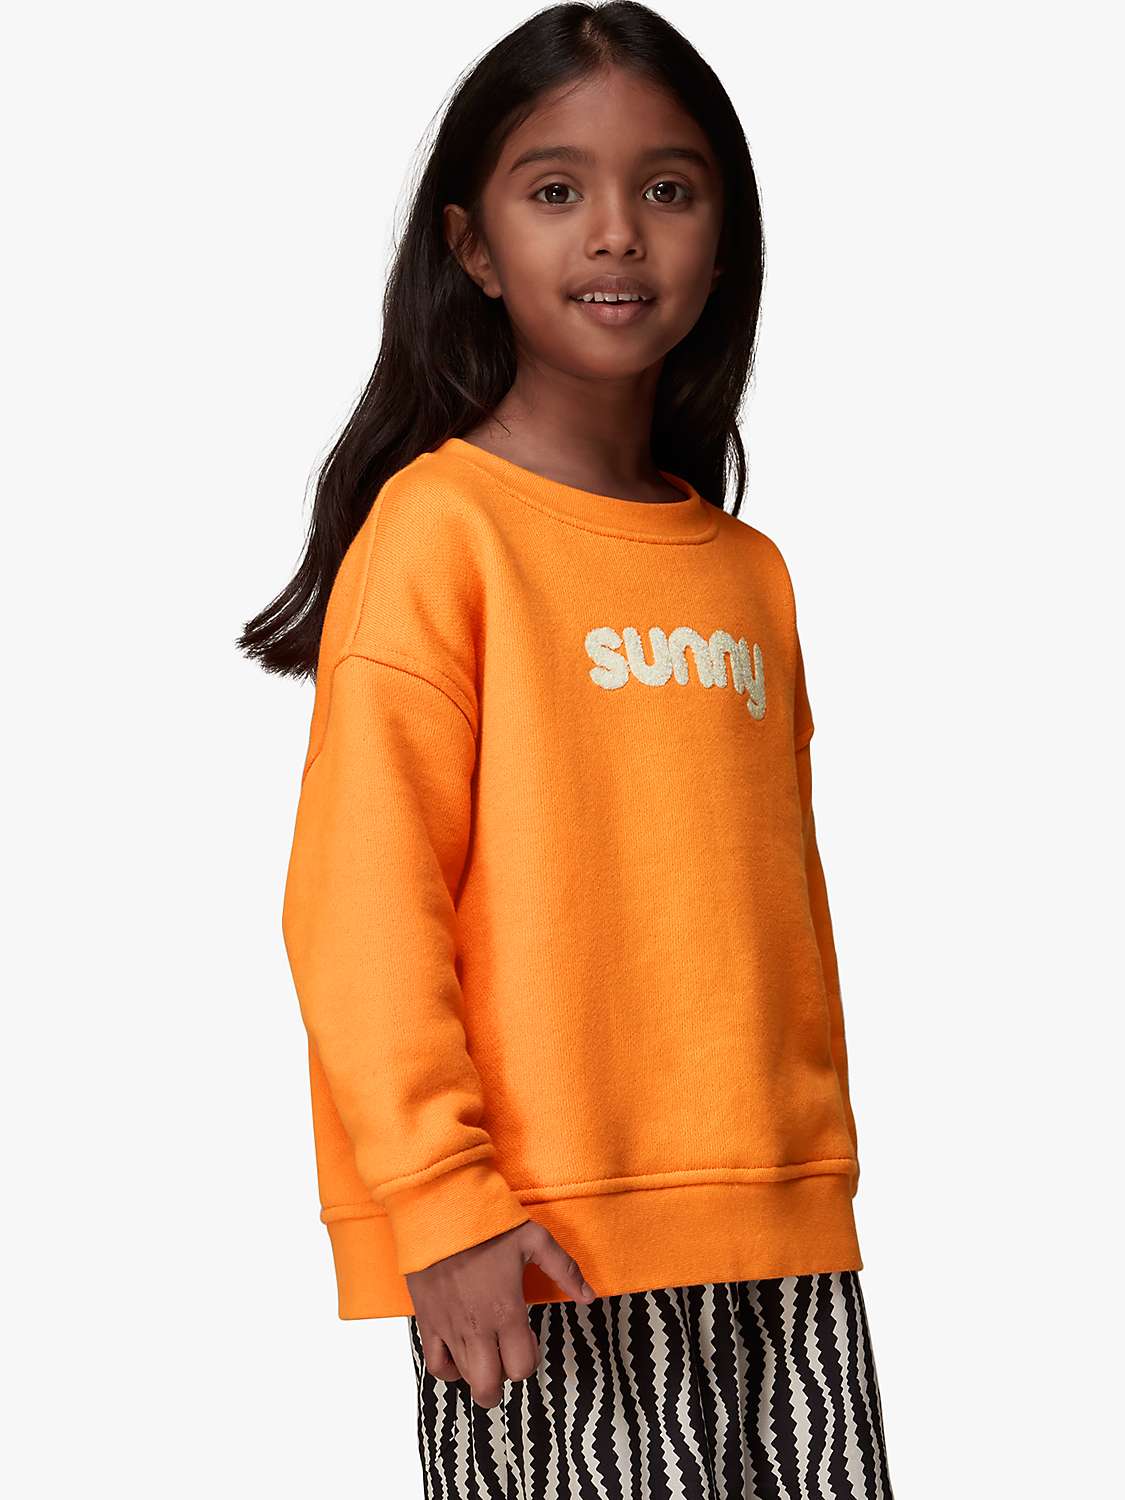 Buy Whistles Kids' Sunny Sweatshirt, Orange Online at johnlewis.com